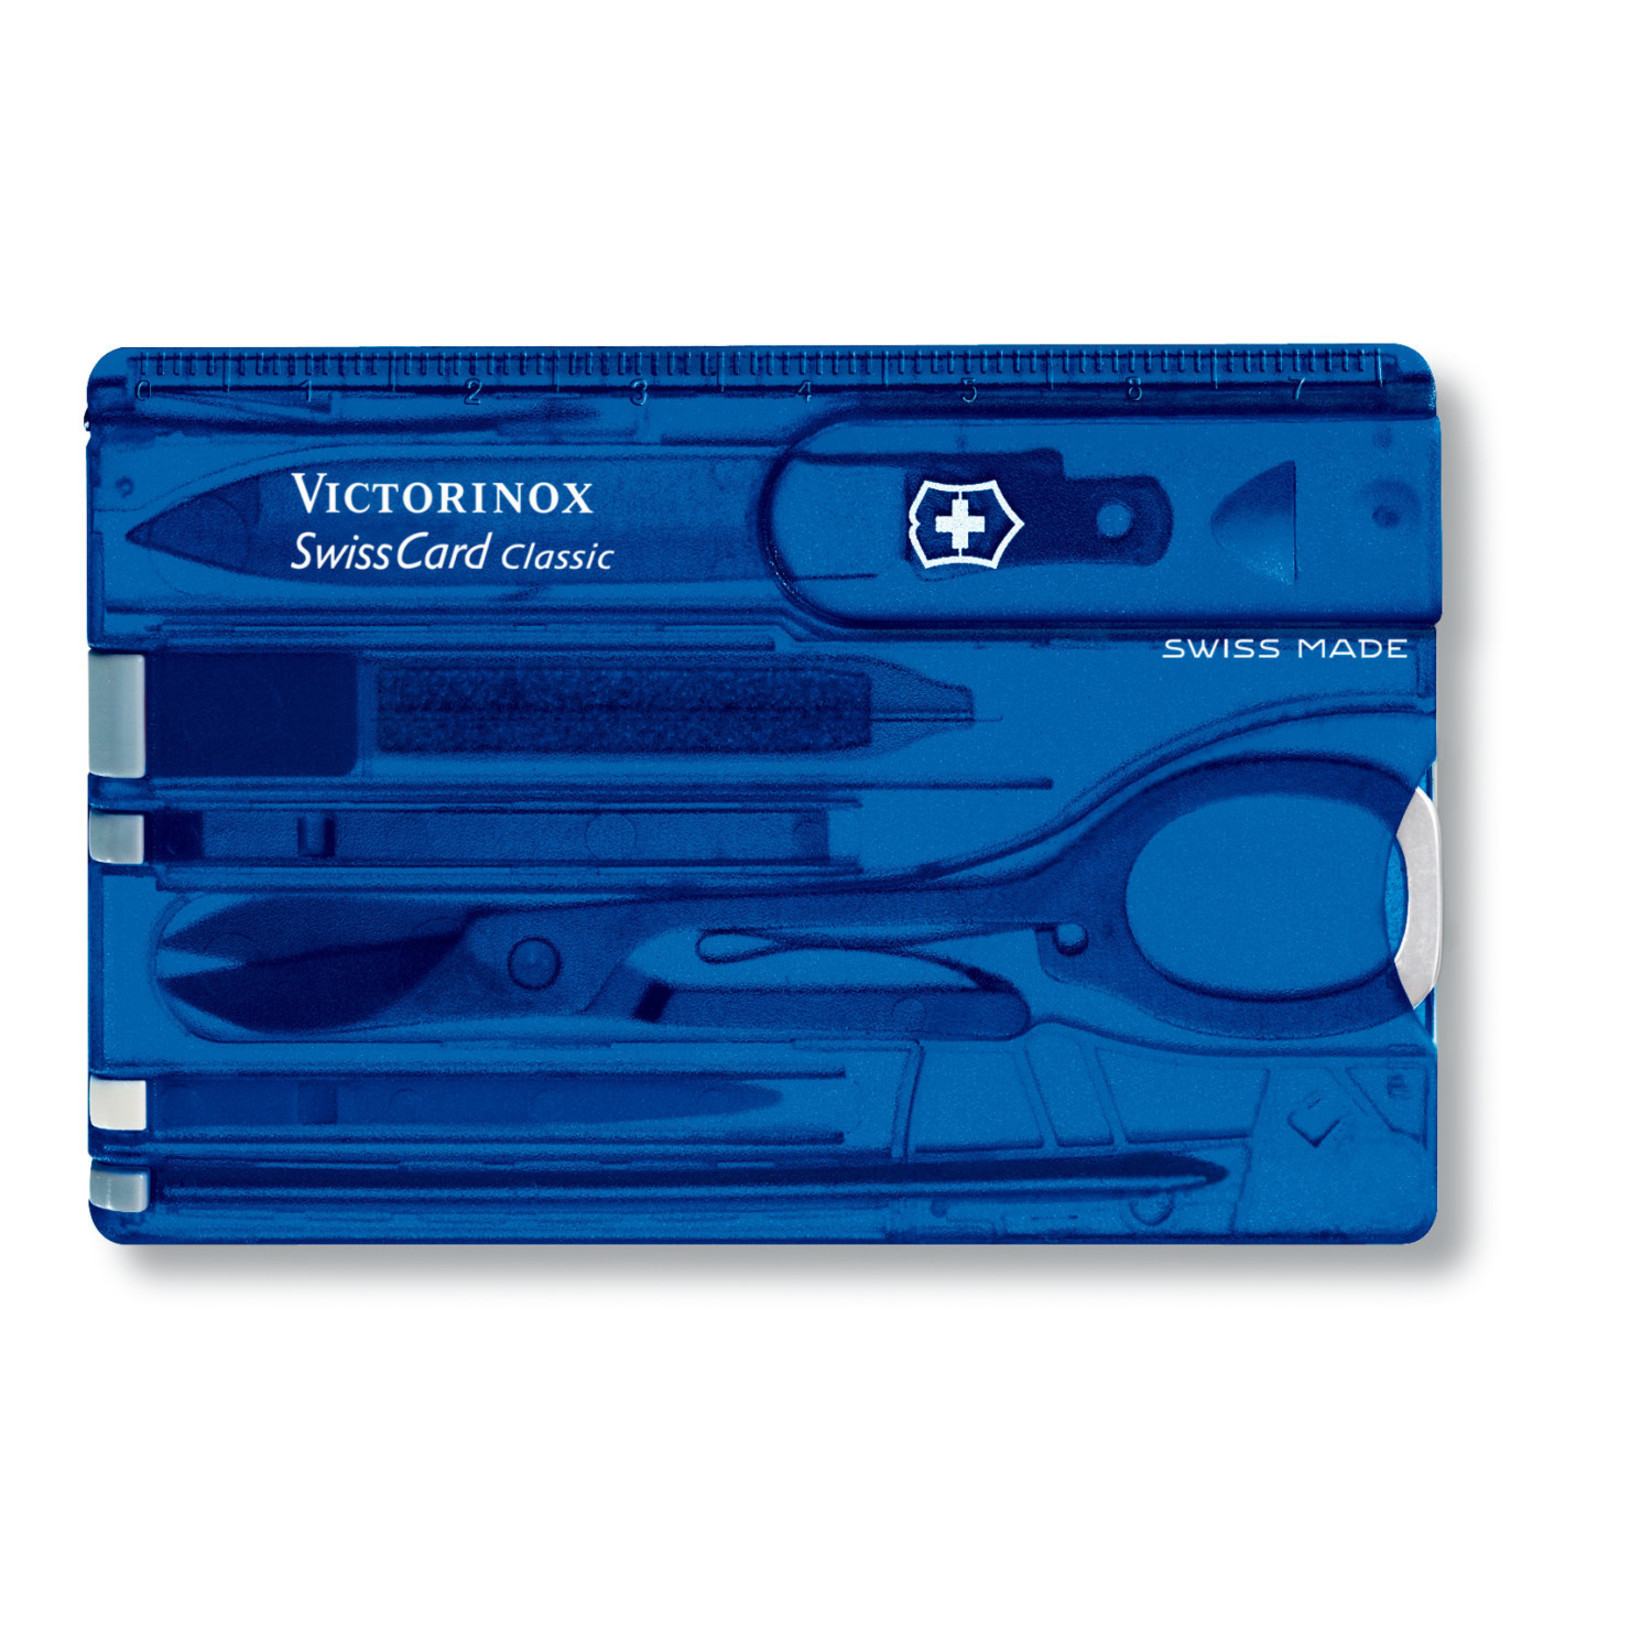 Victorinox Victorinox Swiss Card blauw transparant